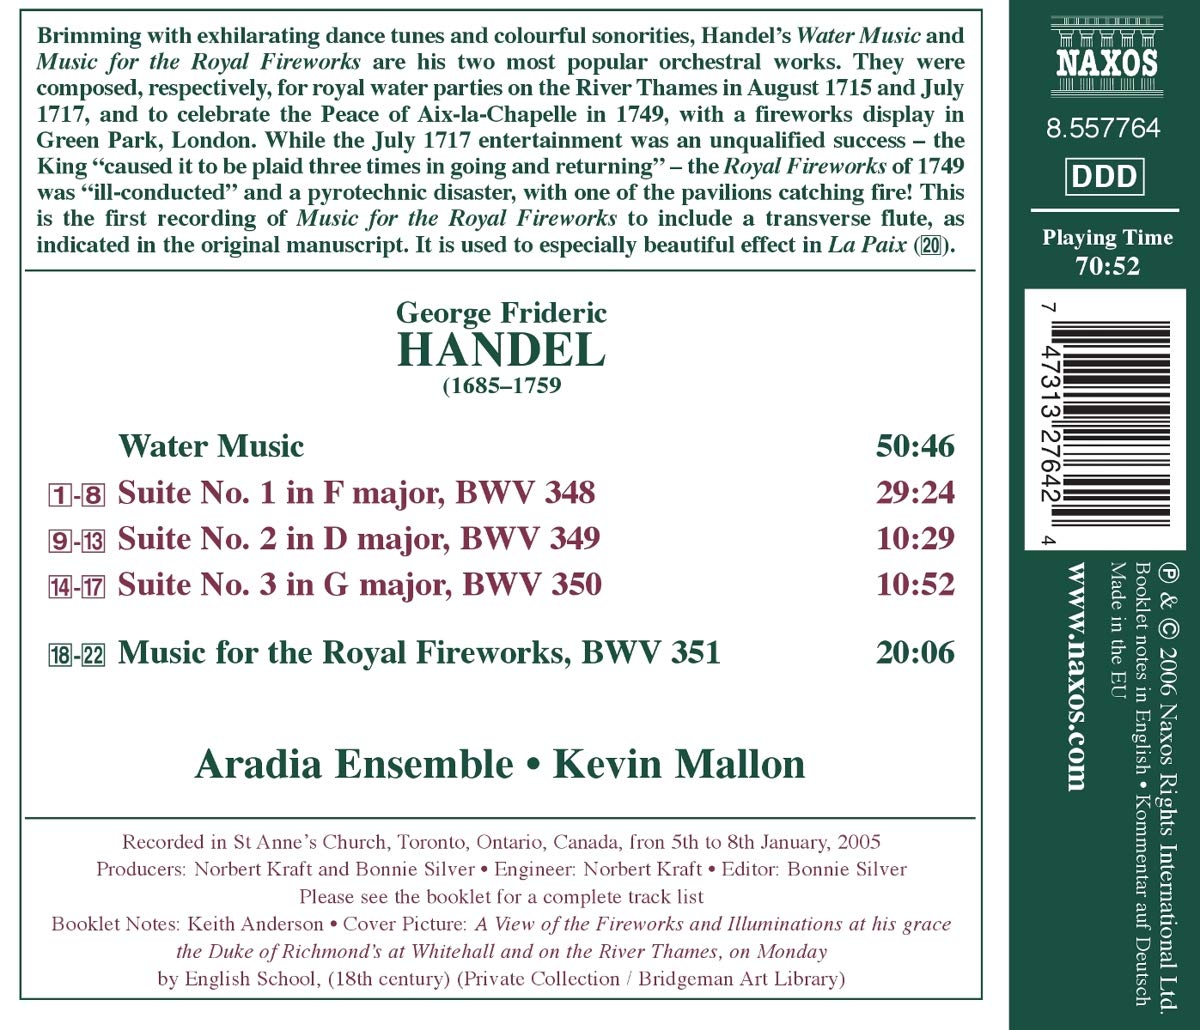 Aradia Ensemble / Kevin Mallon 헨델: 수상 음악, 왕궁의 불꽃놀이 (Handel: Water Music, Music for the Royal Fireworks) 